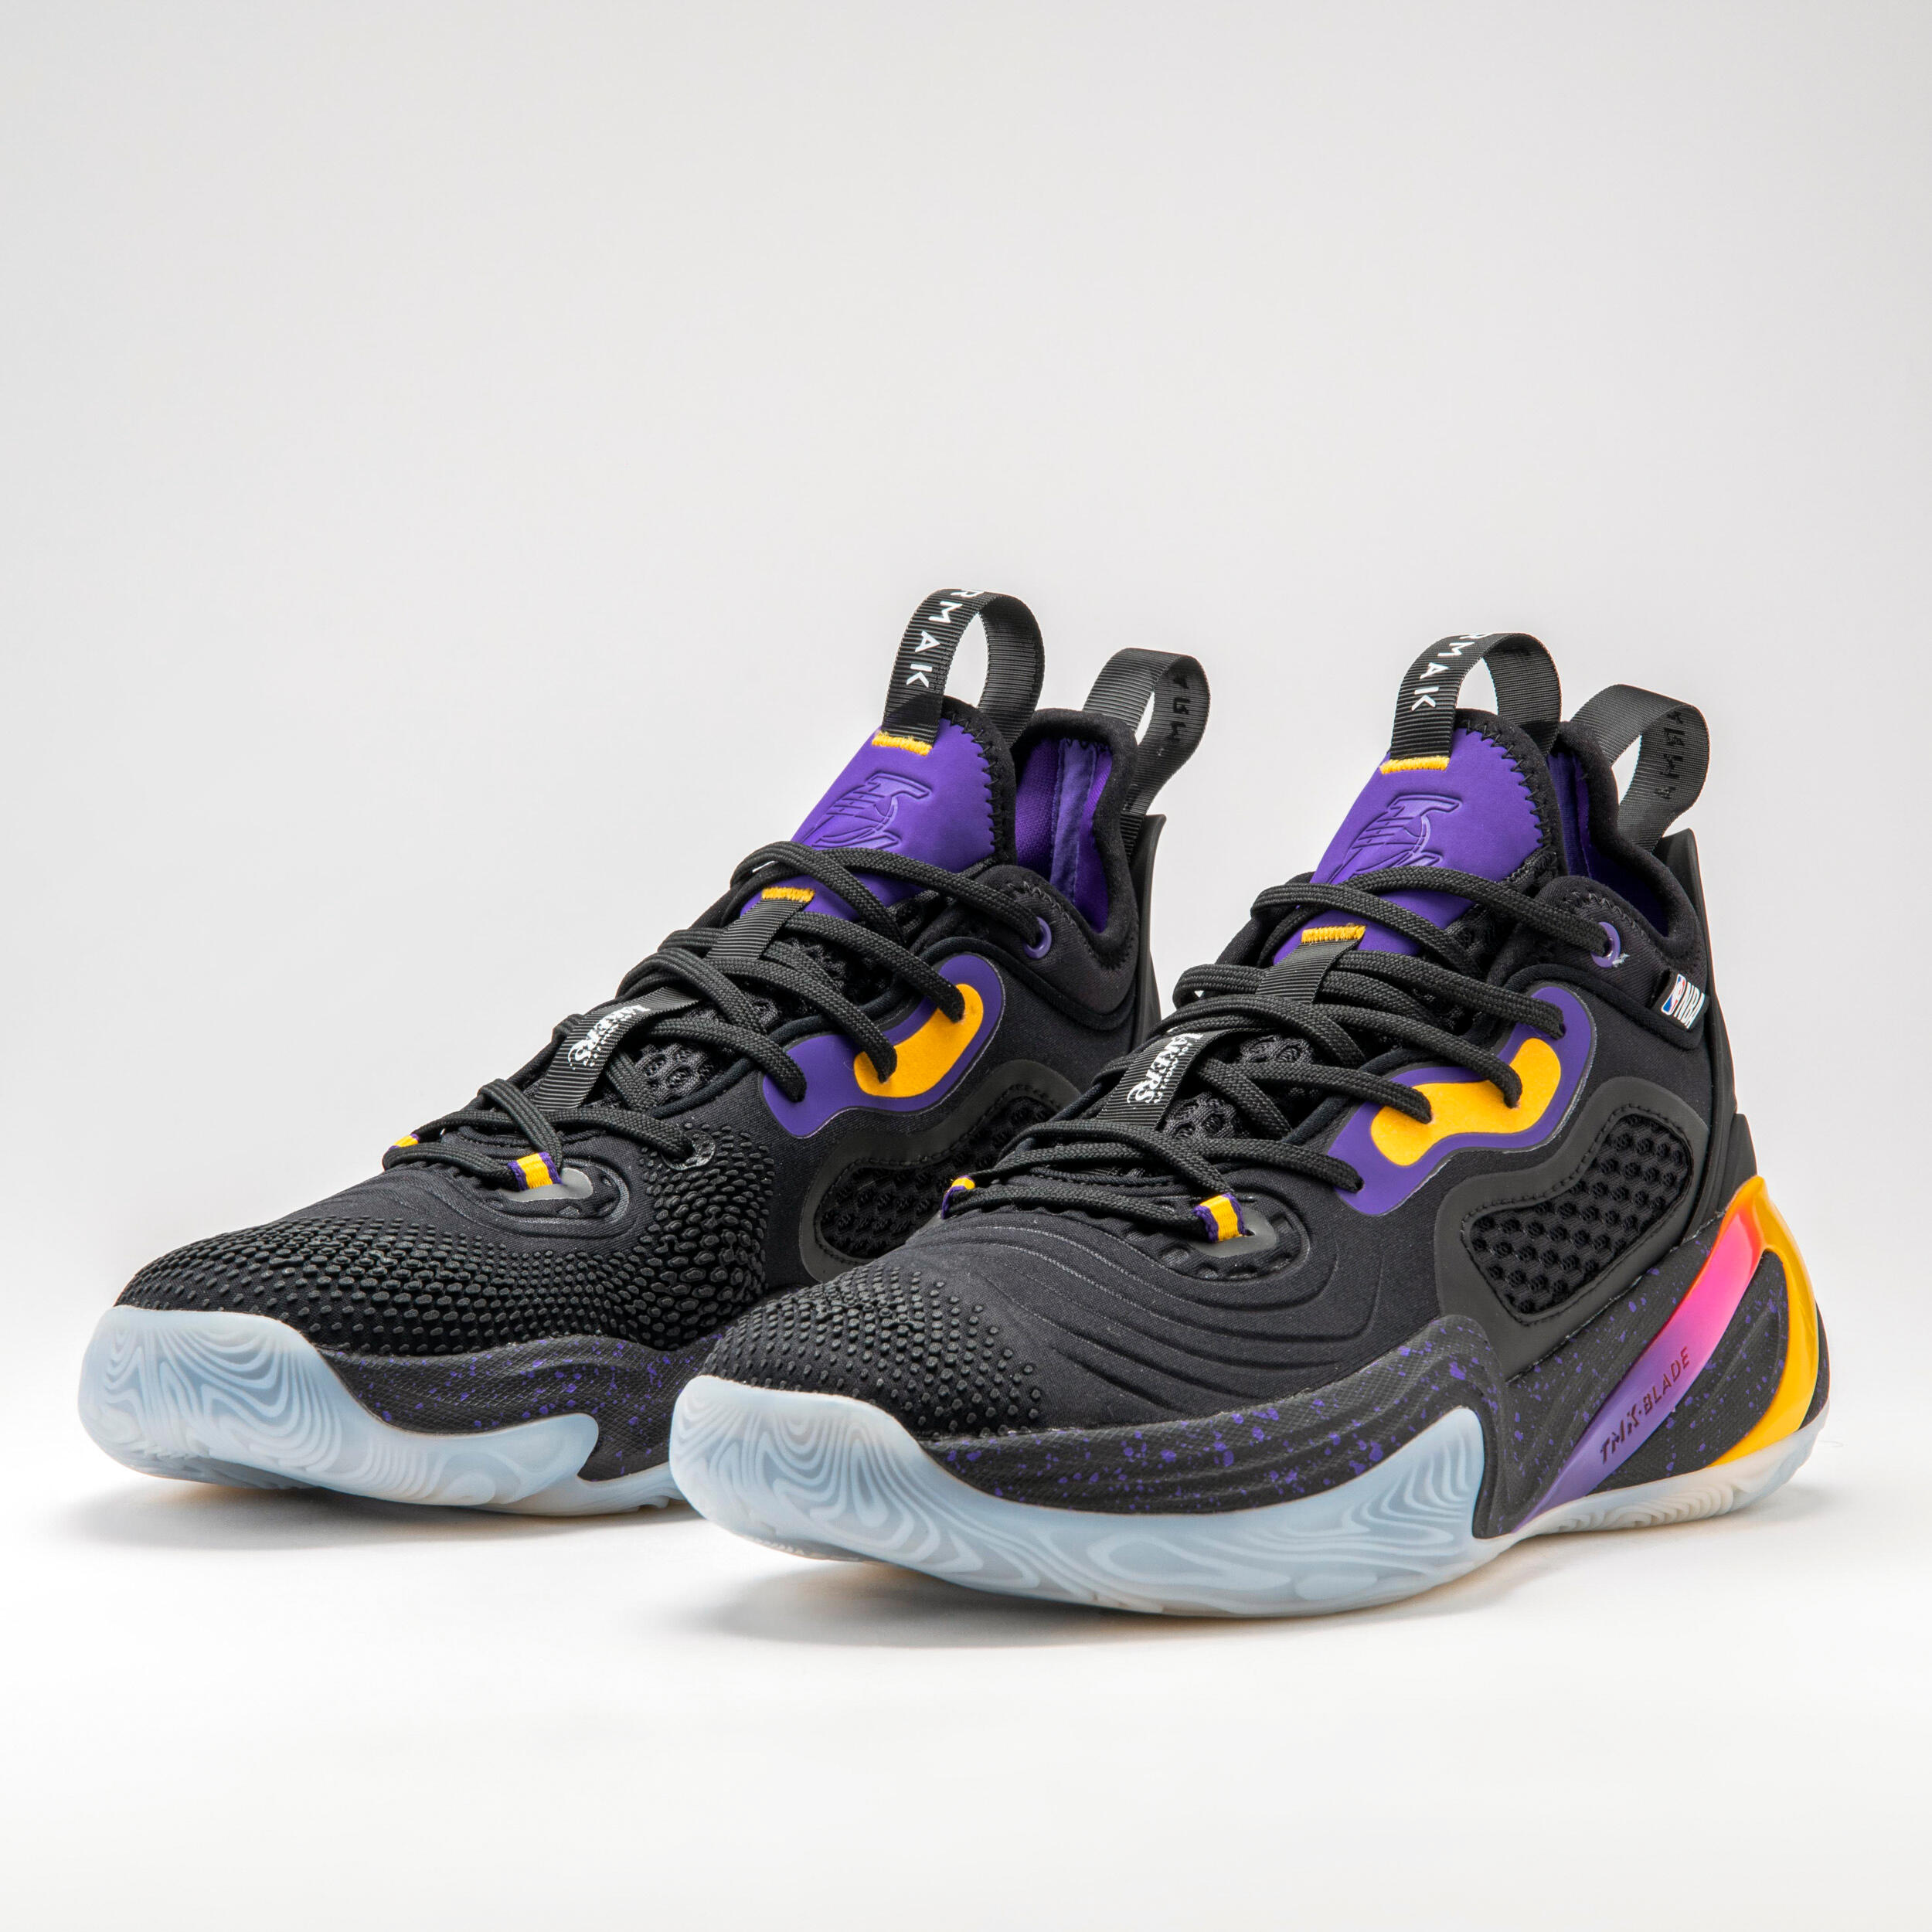 Men's/Women's Basketball Shoes SE900 - Black/NBA Los Angeles Lakers 2/10